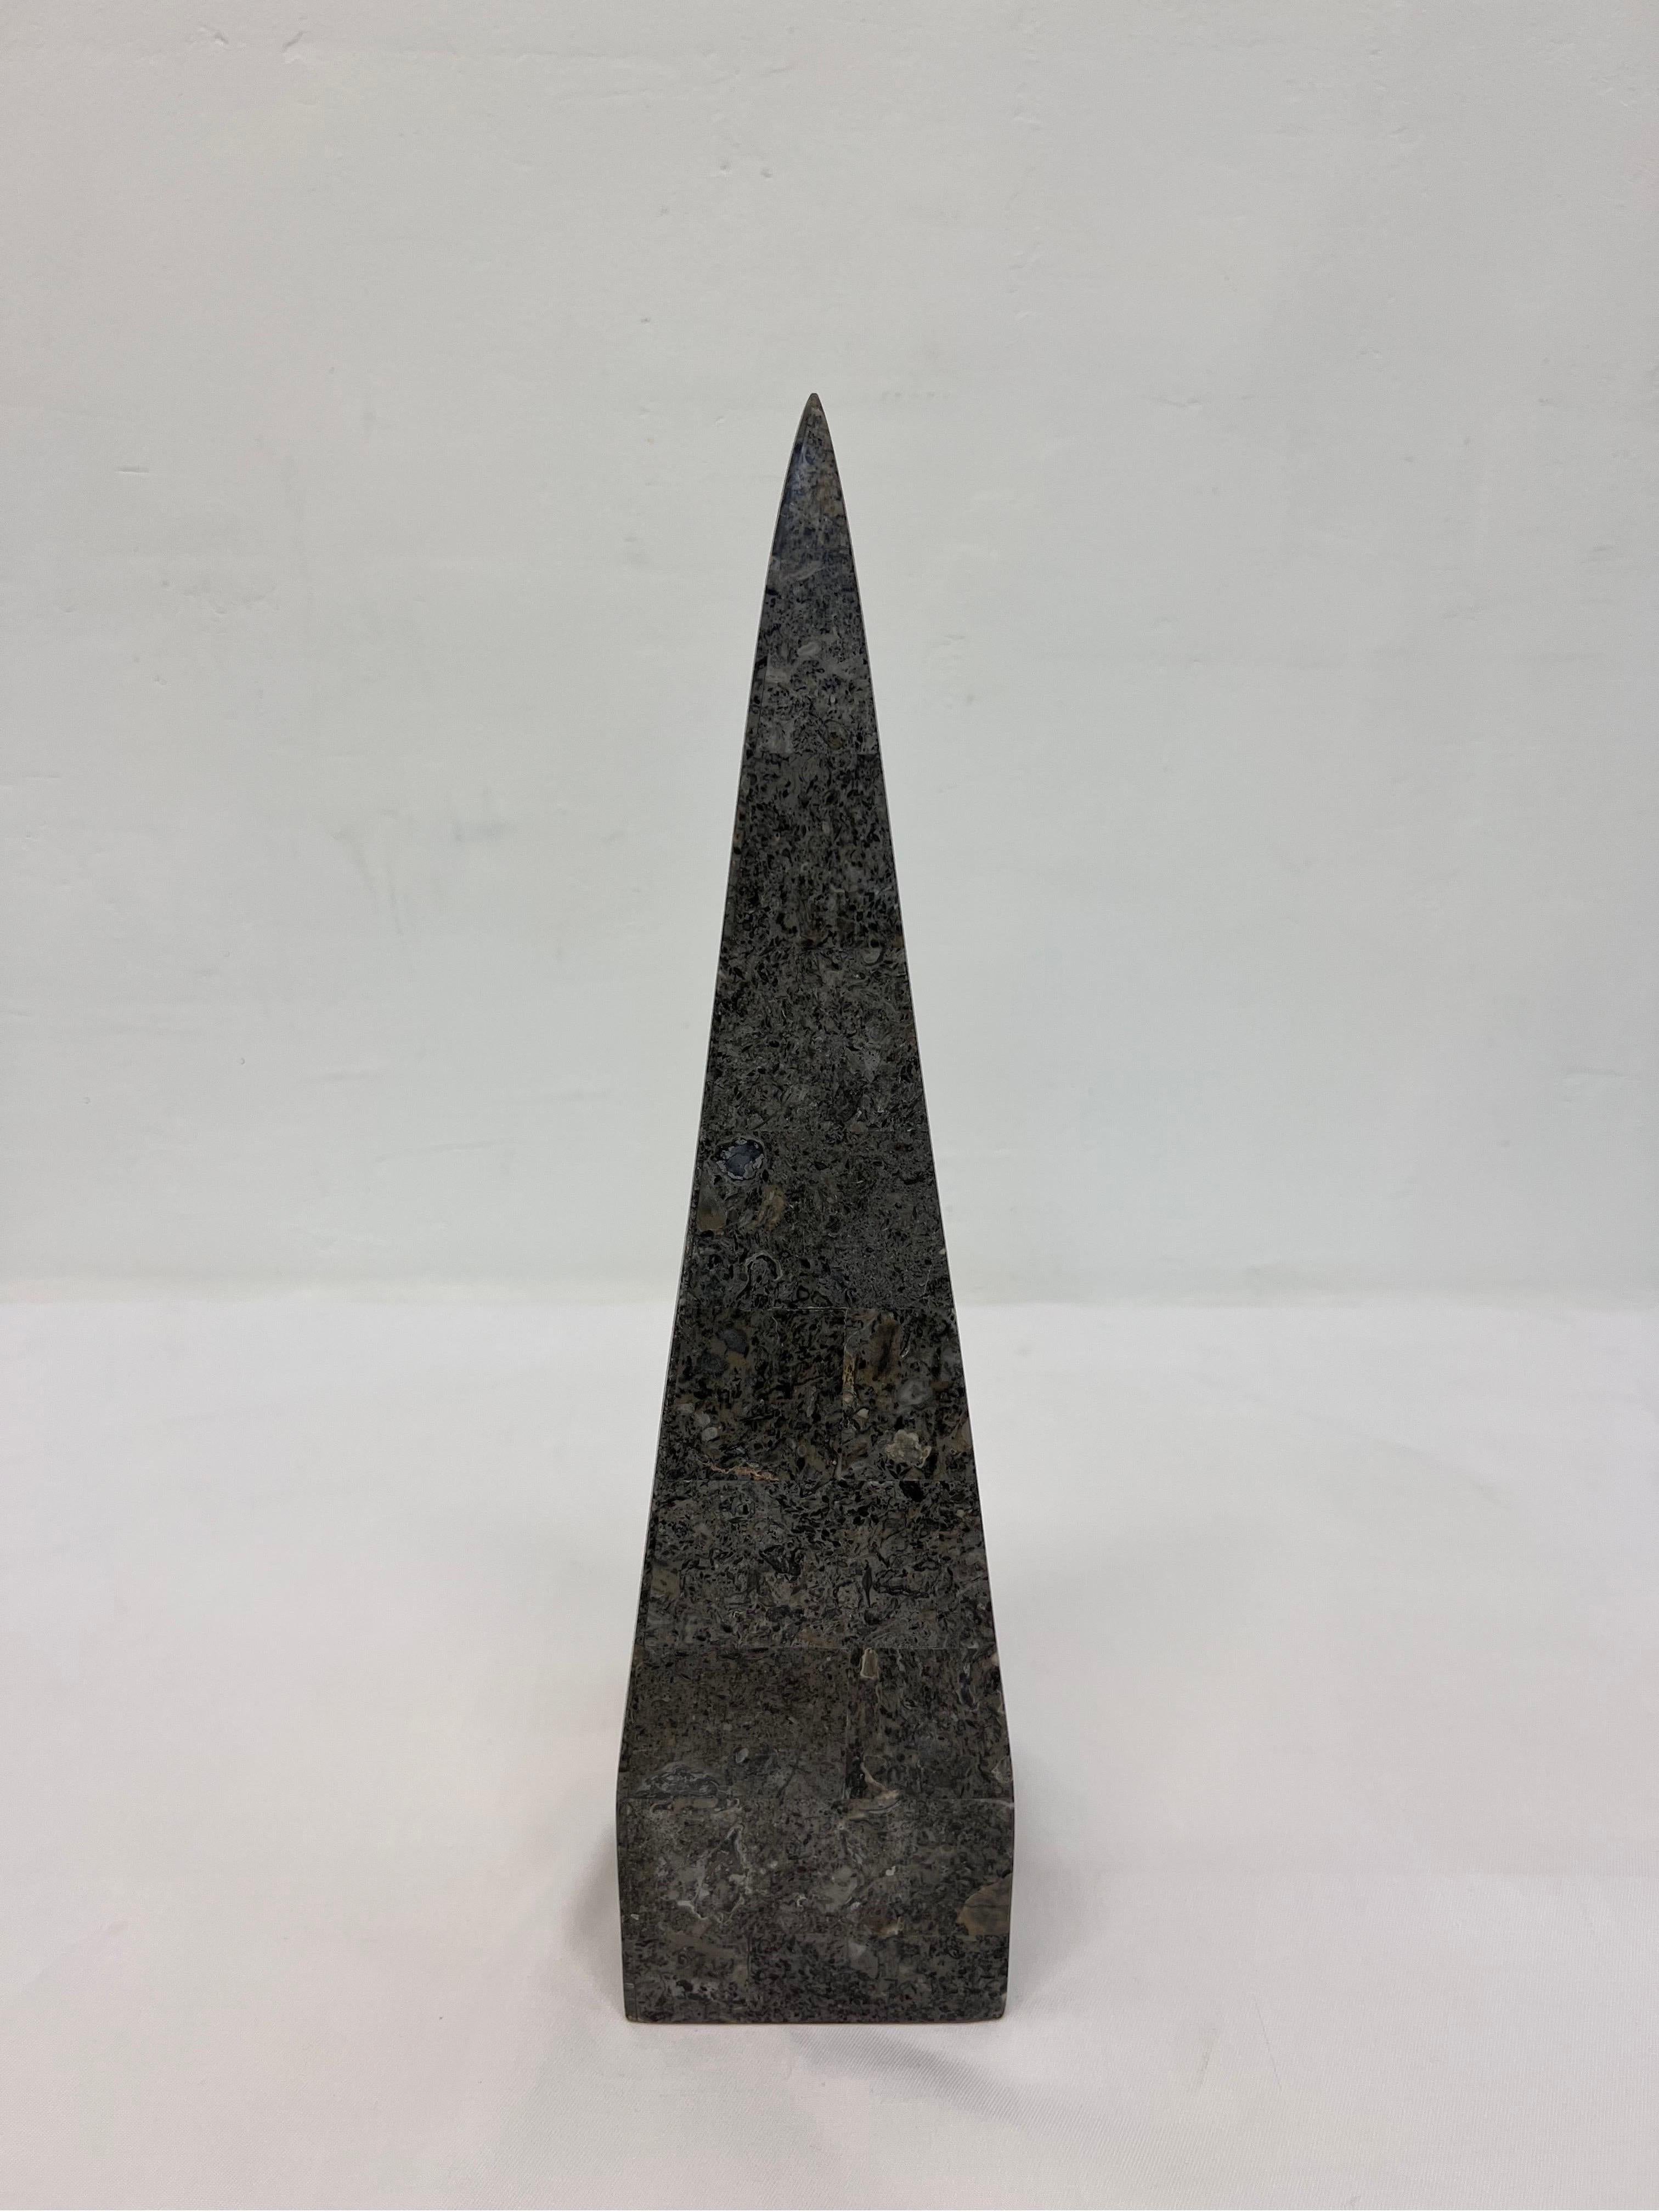 Tessellated grey stone obelisk, circa 1990s.